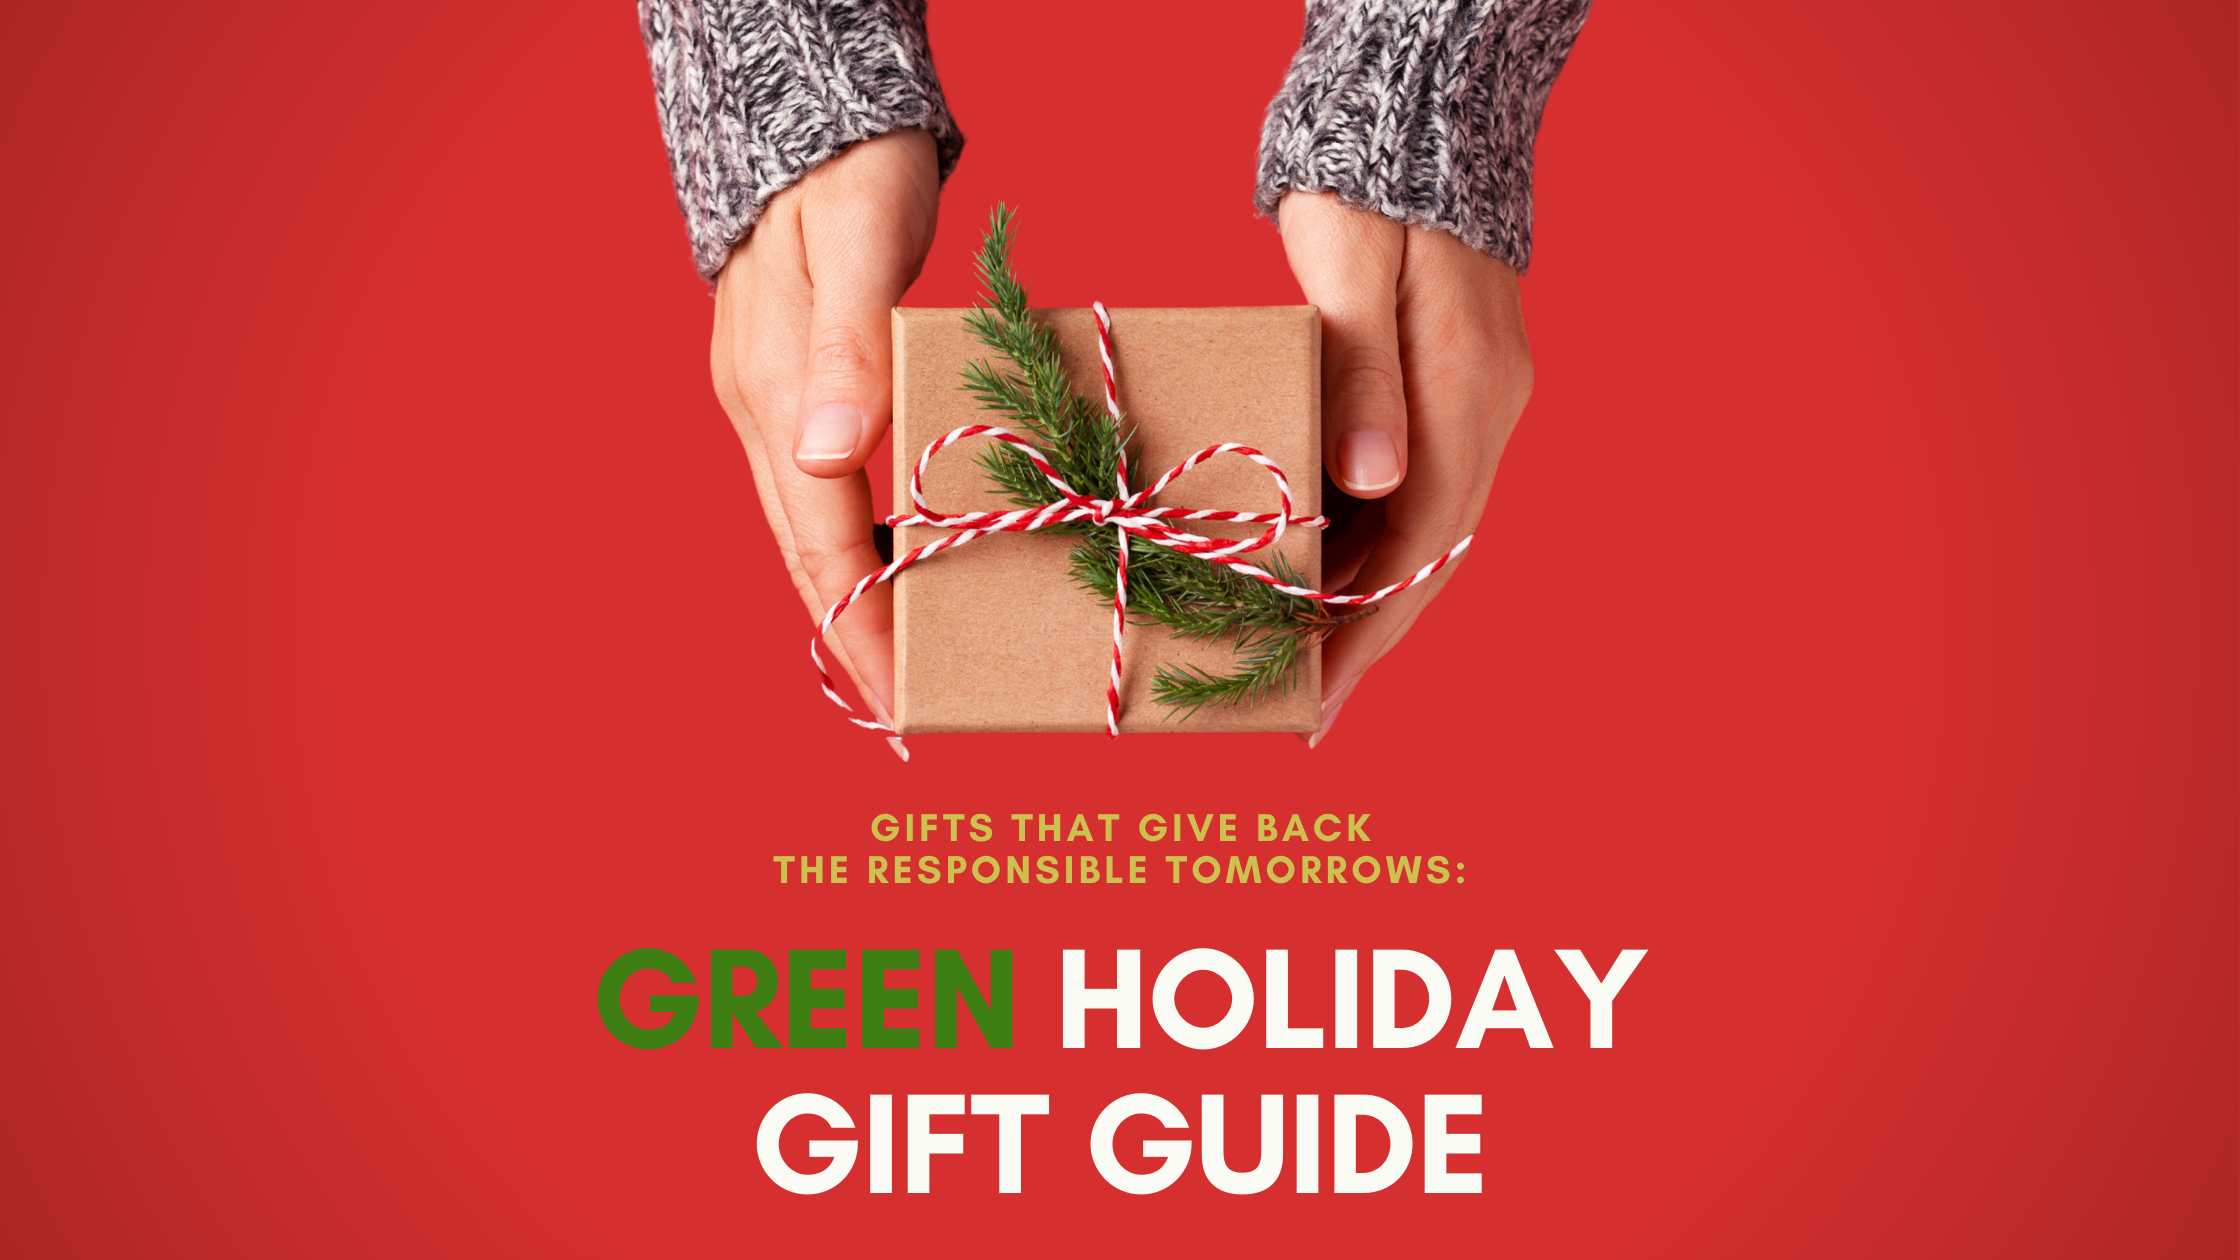 Responsible Tomorrows: Green Holiday Gift Guide